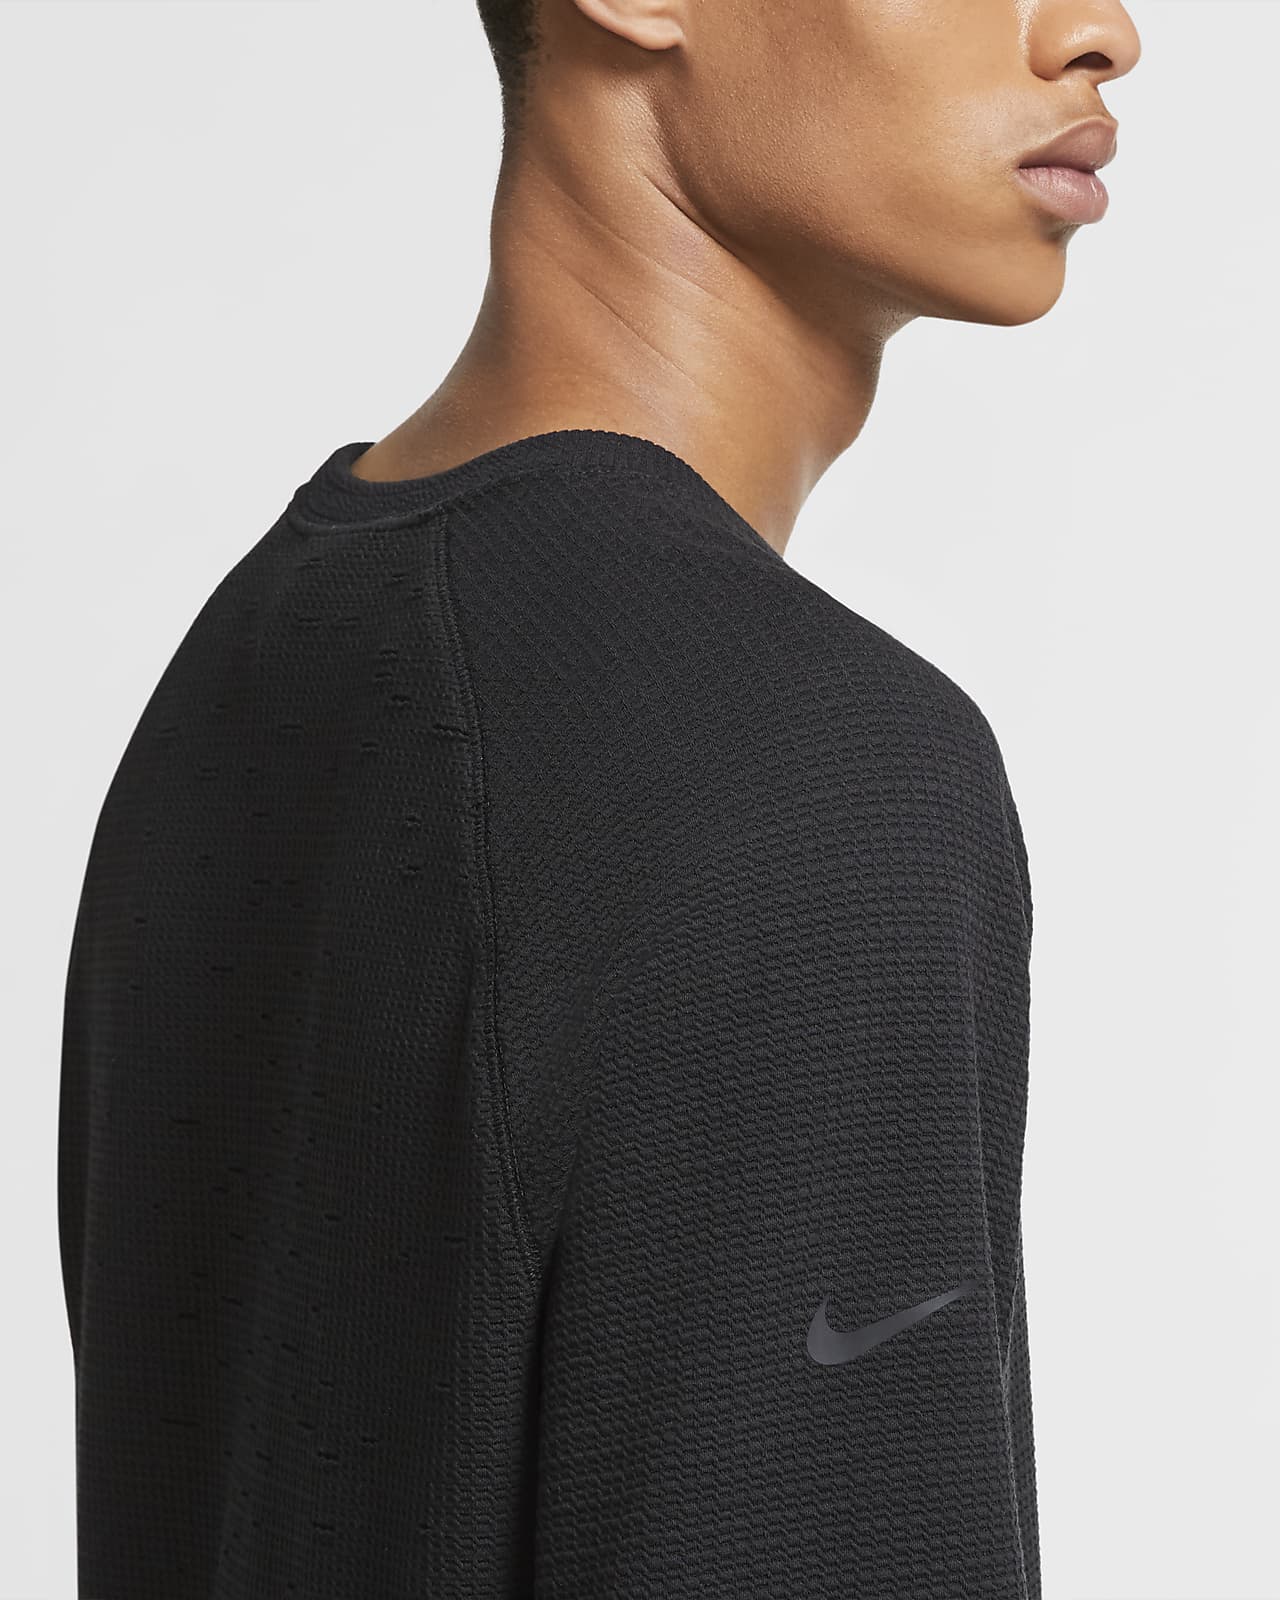 Camiseta de manga larga para hombre Nike Sportswear Tech Pack. Nike.com